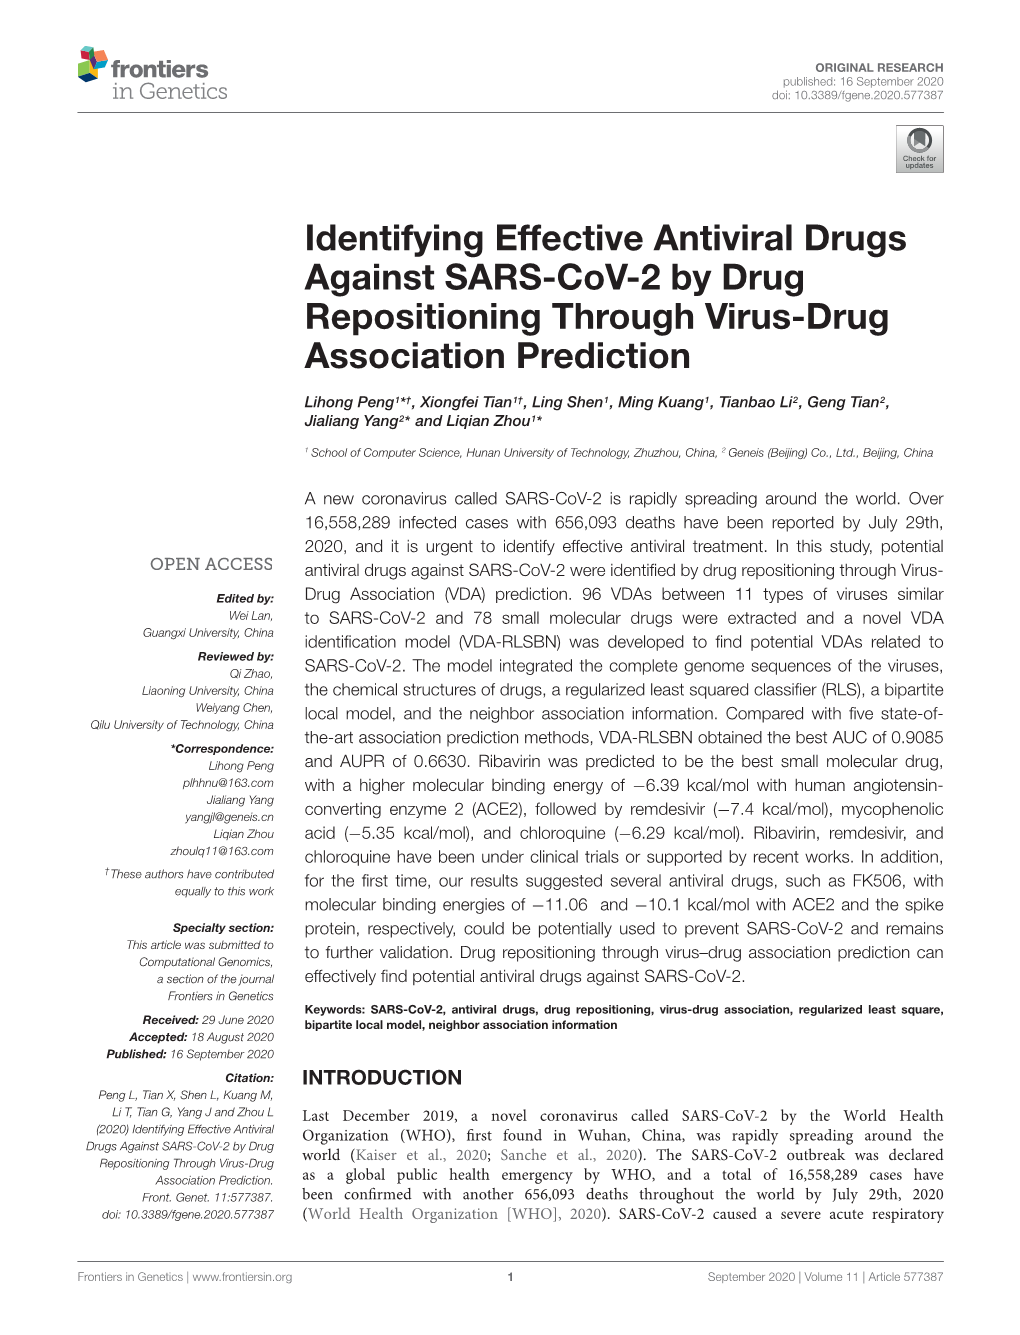 Identifying Effective Antiviral Drugs Against SARS-Cov-2 by Drug Repositioning Through Virus-Drug Association Prediction